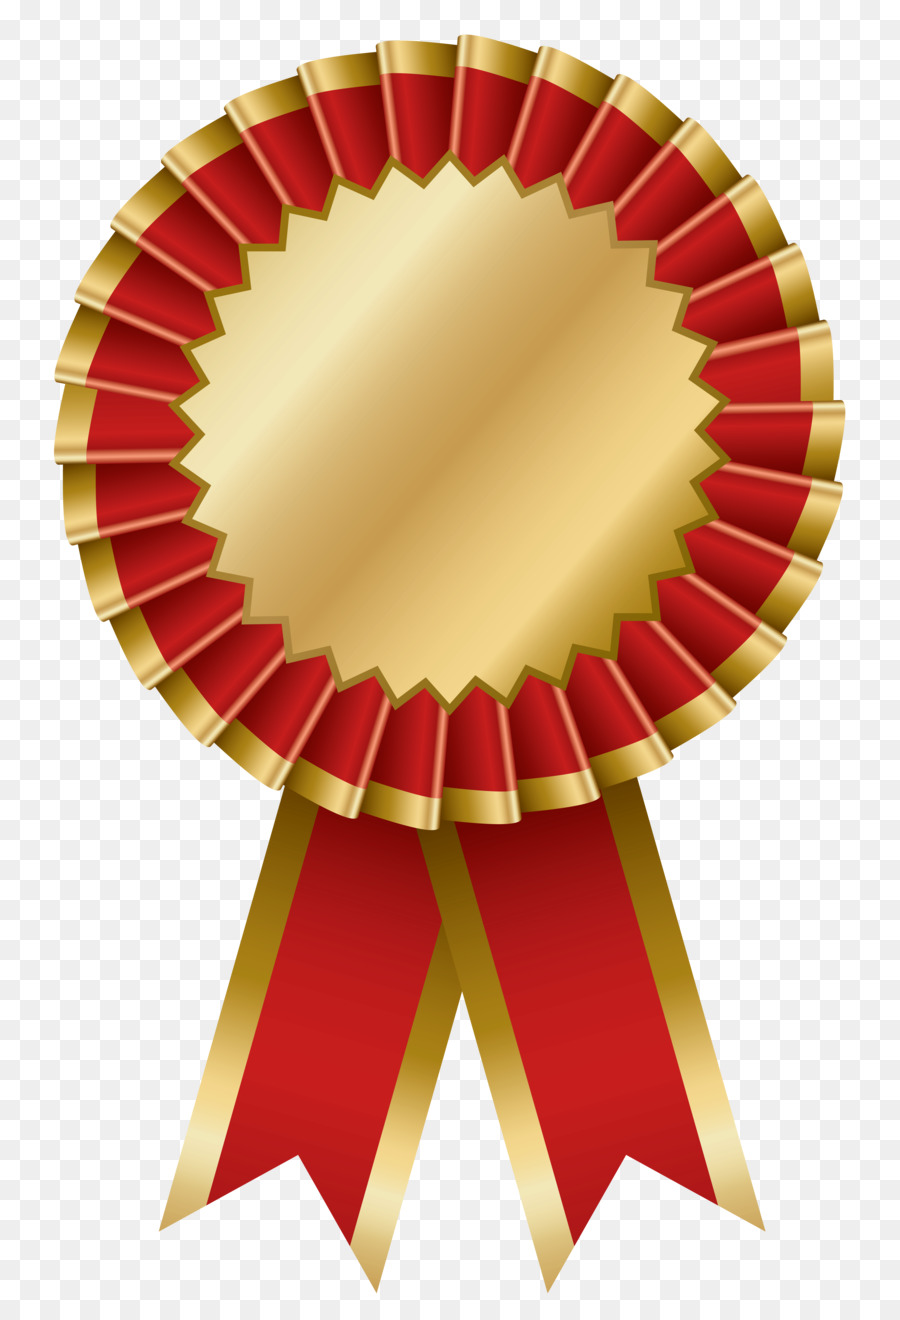 Ribbon Gold medal Clip art - Transparent Ribbon Cliparts png download - 4053*5926 - Free Transparent Ribbon png Download.